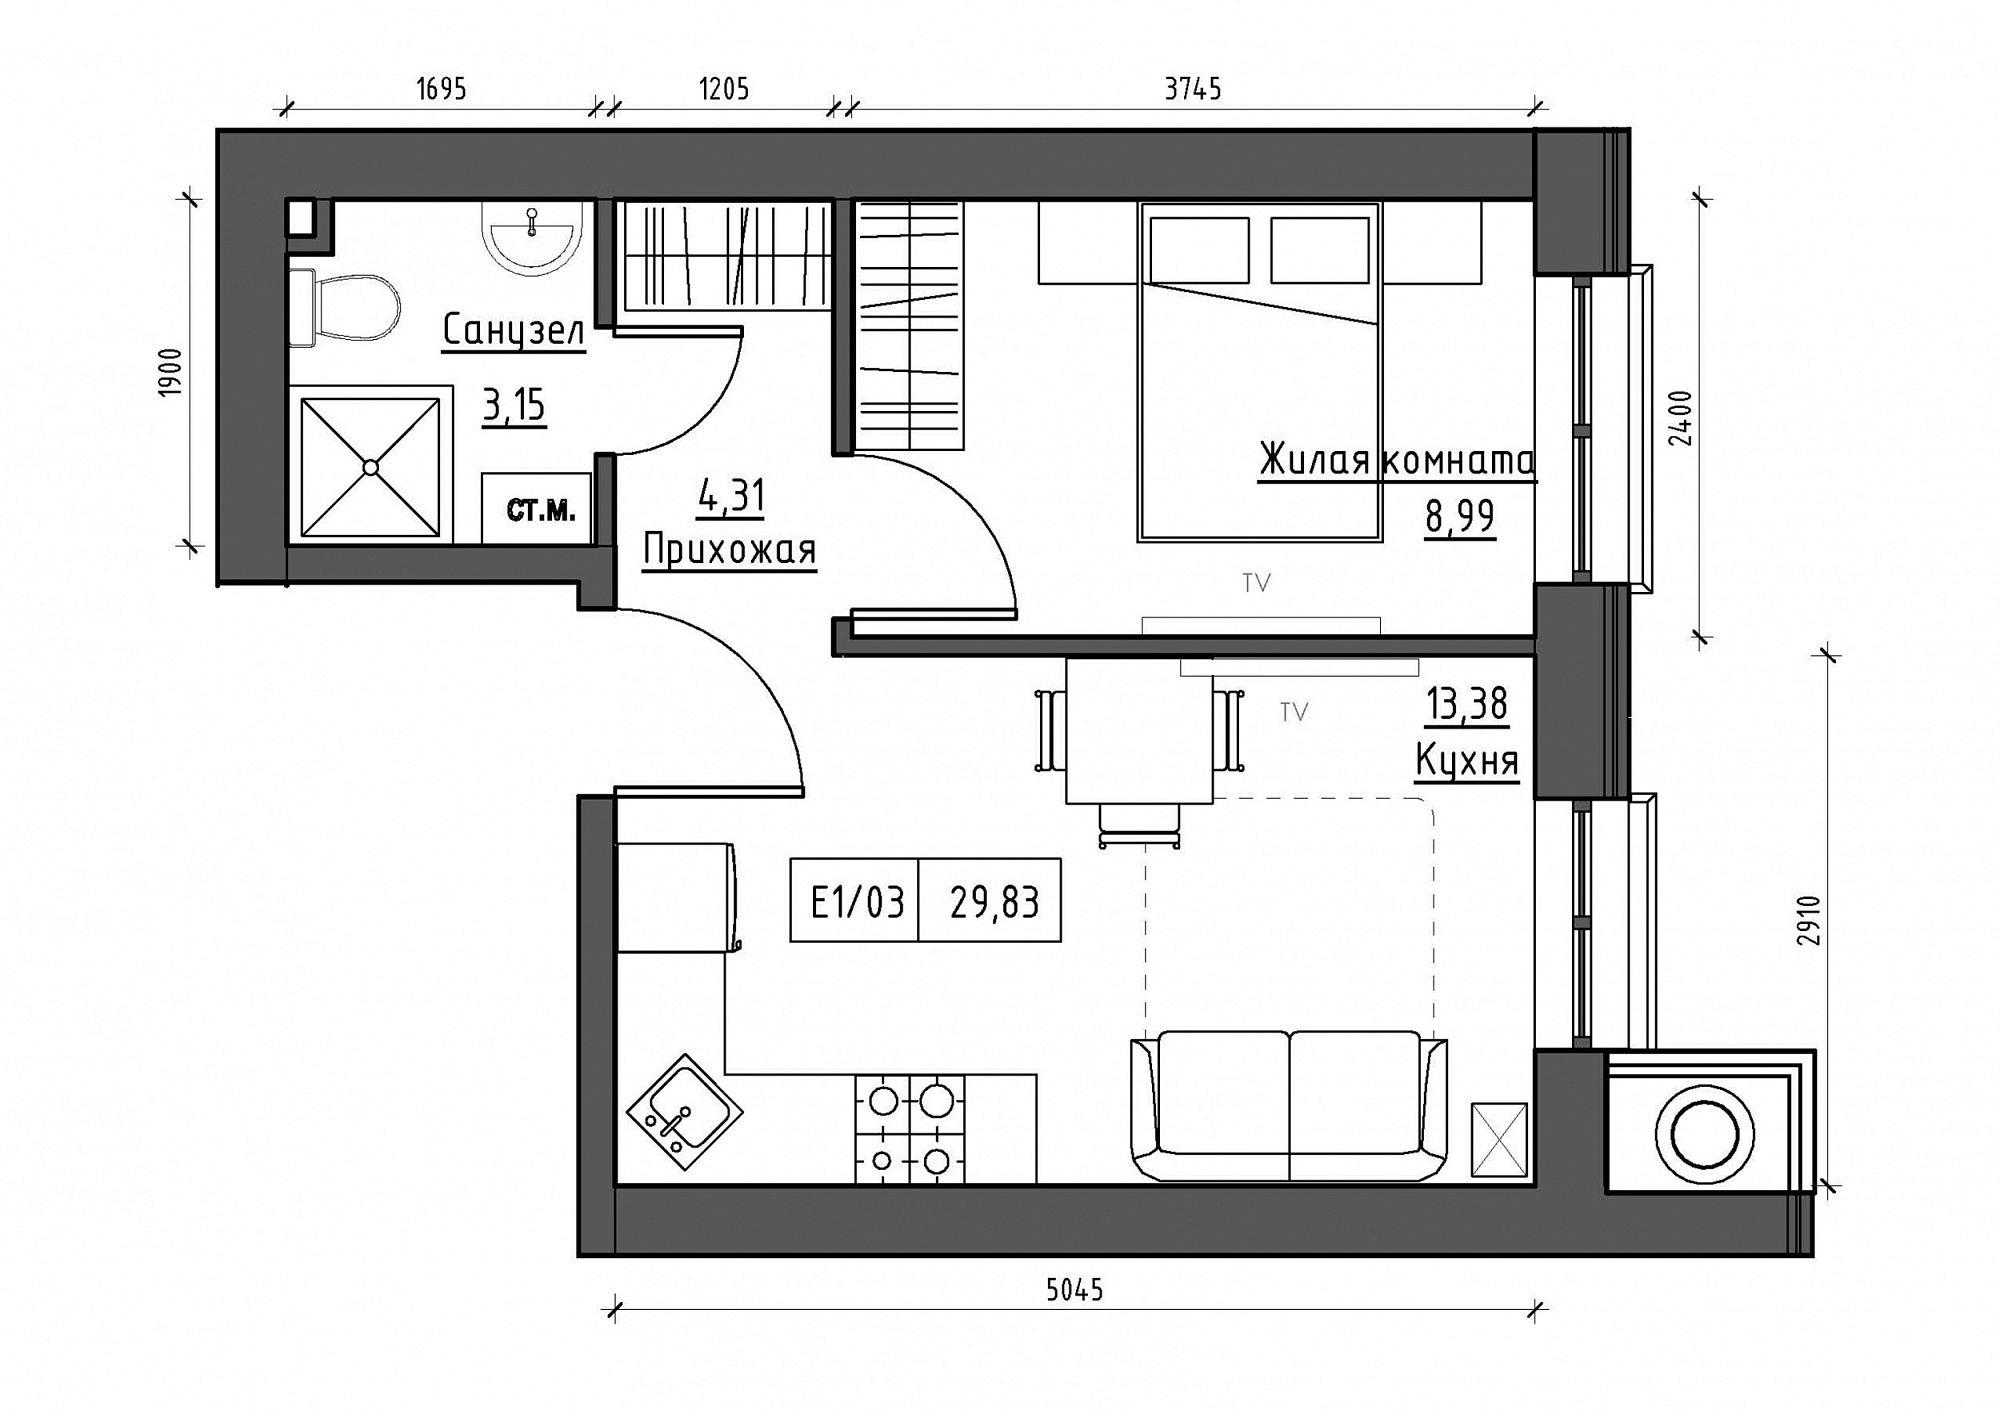 Planning 1-rm flats area 29.83m2, KS-012-01/0013.